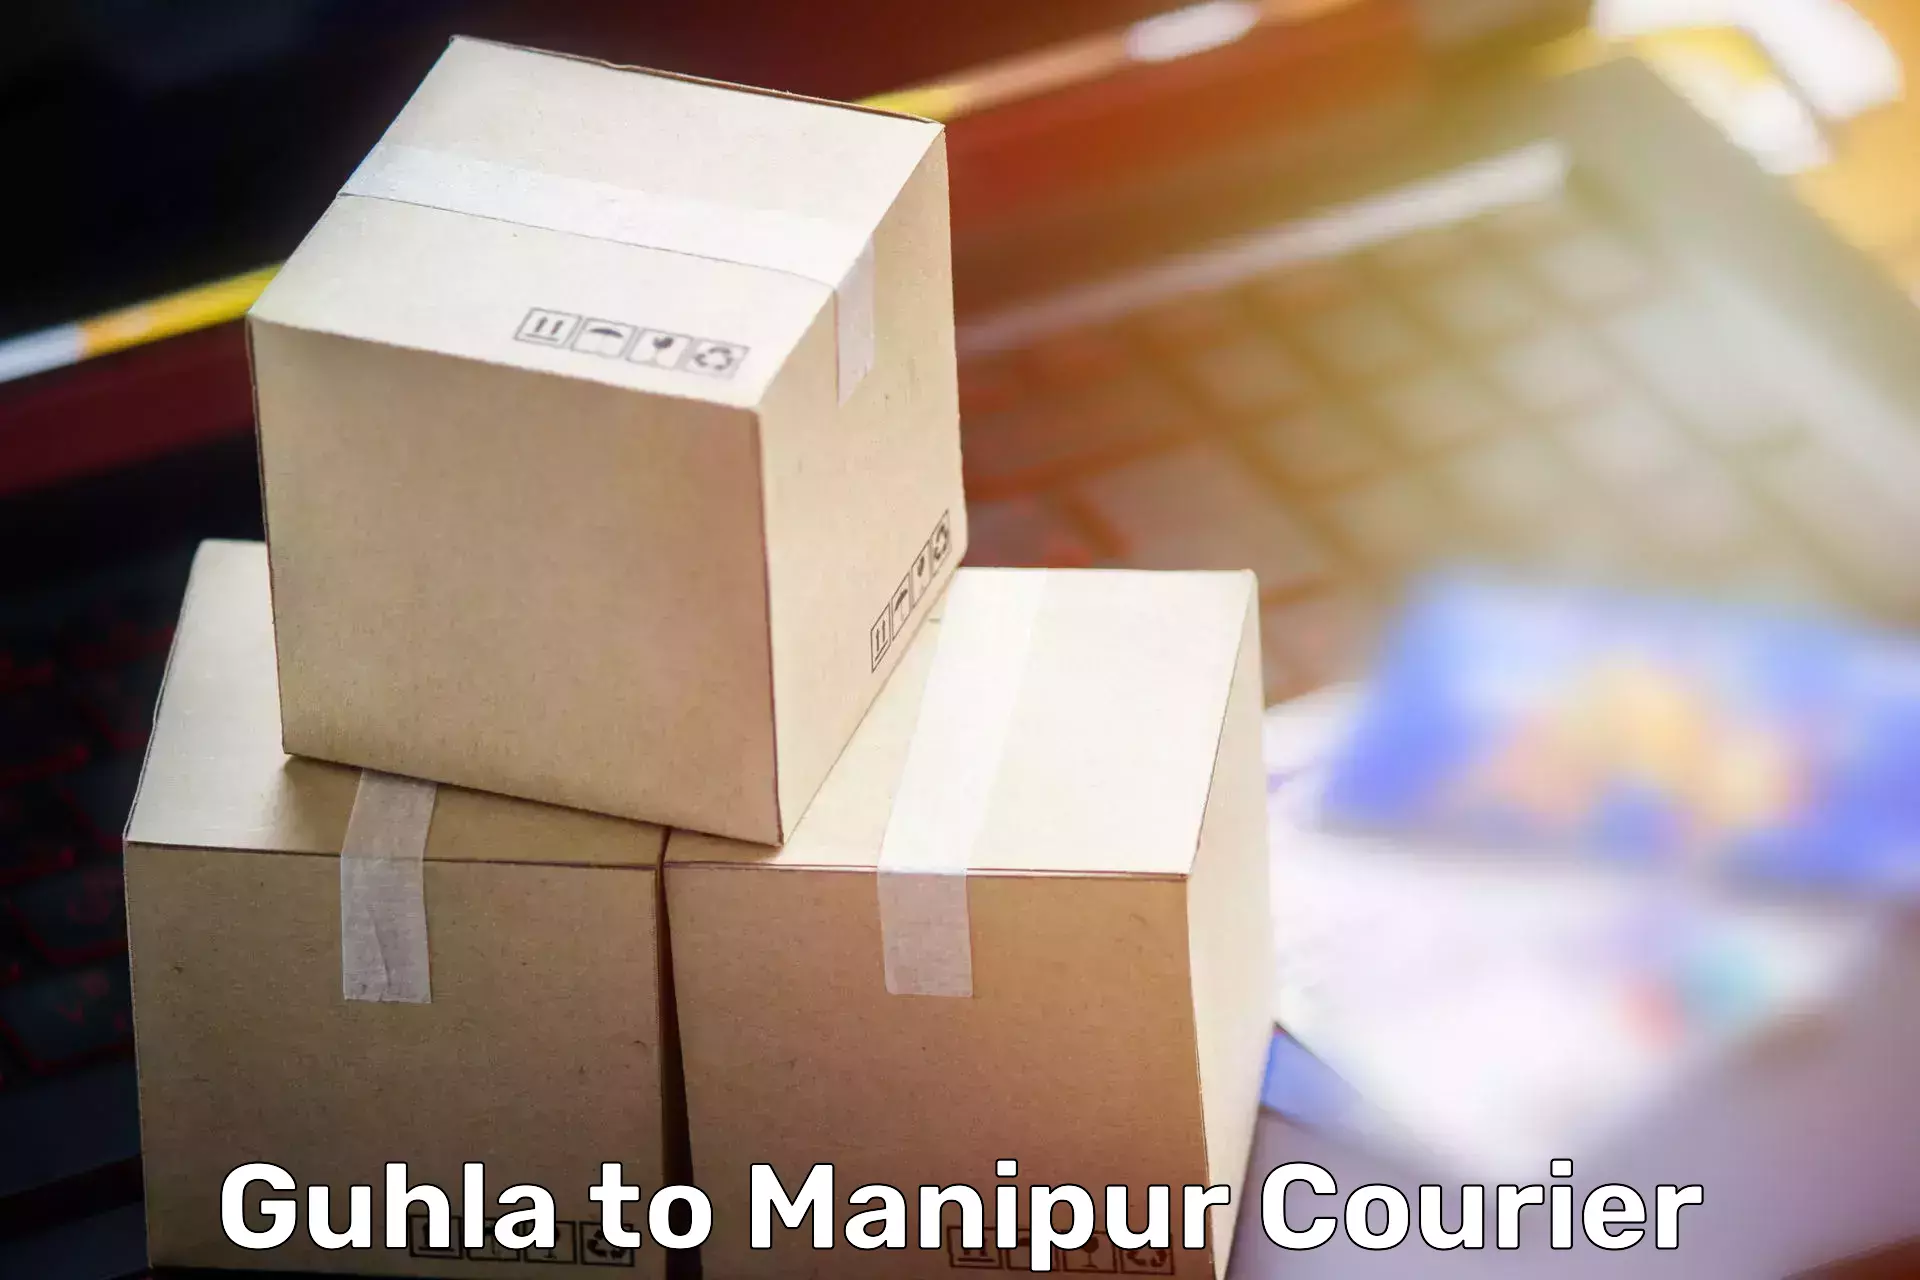 Professional moving company Guhla to Manipur